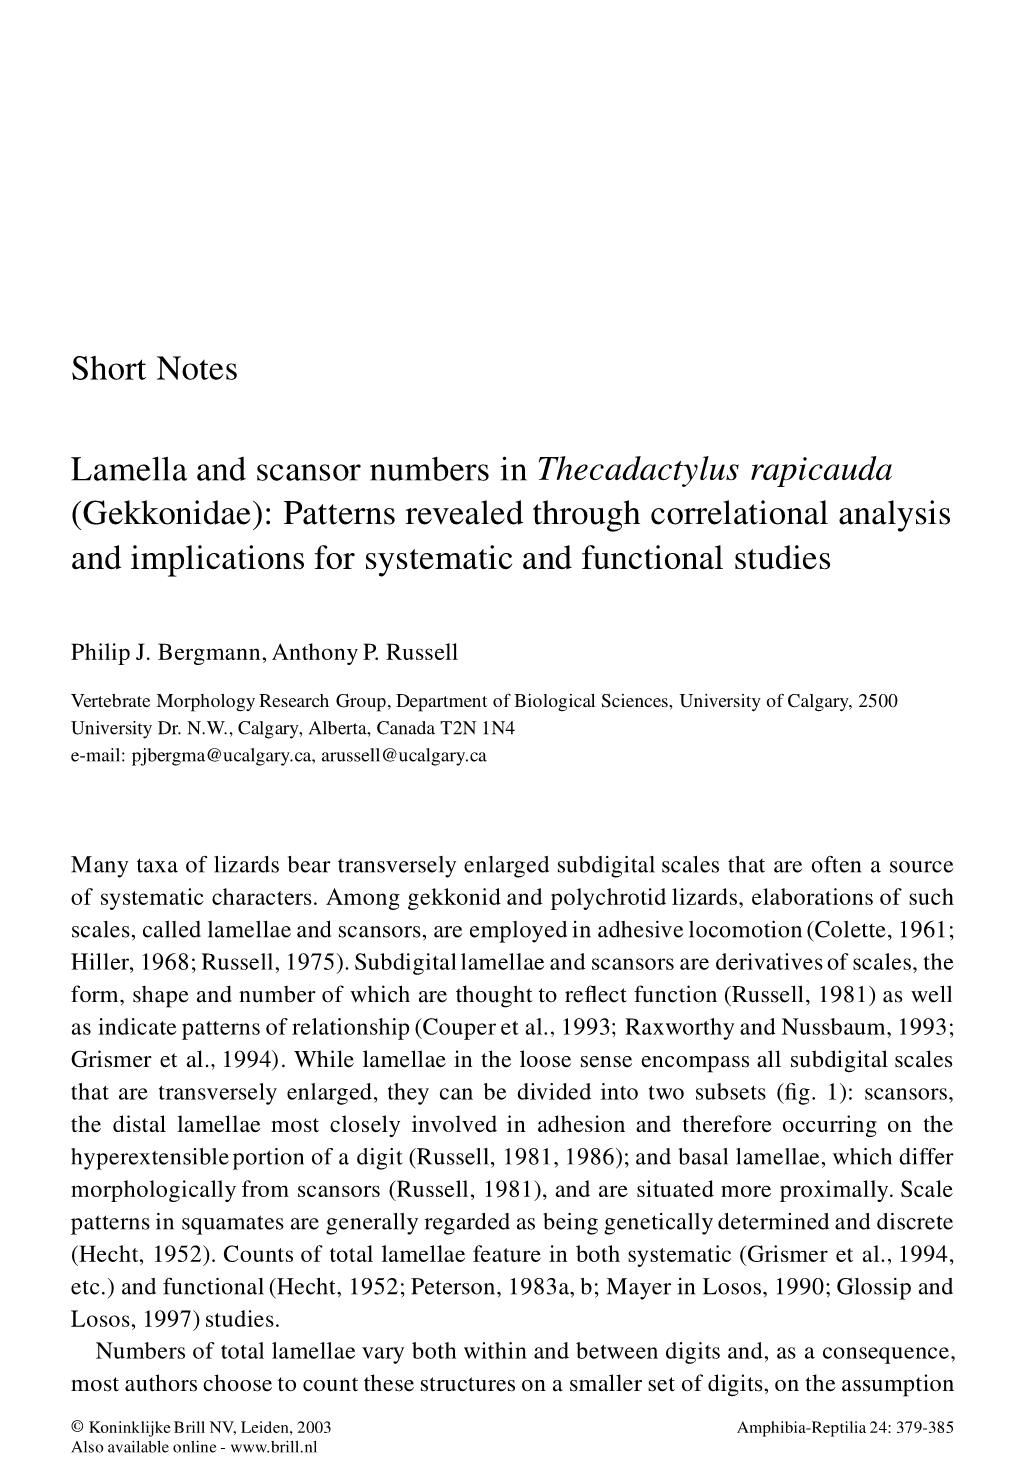 Lamella and Scansor Numbers in Thecadactylus Rapicauda (Gekkonidae): Patterns Revealed Through Correlational Analysis and Implic